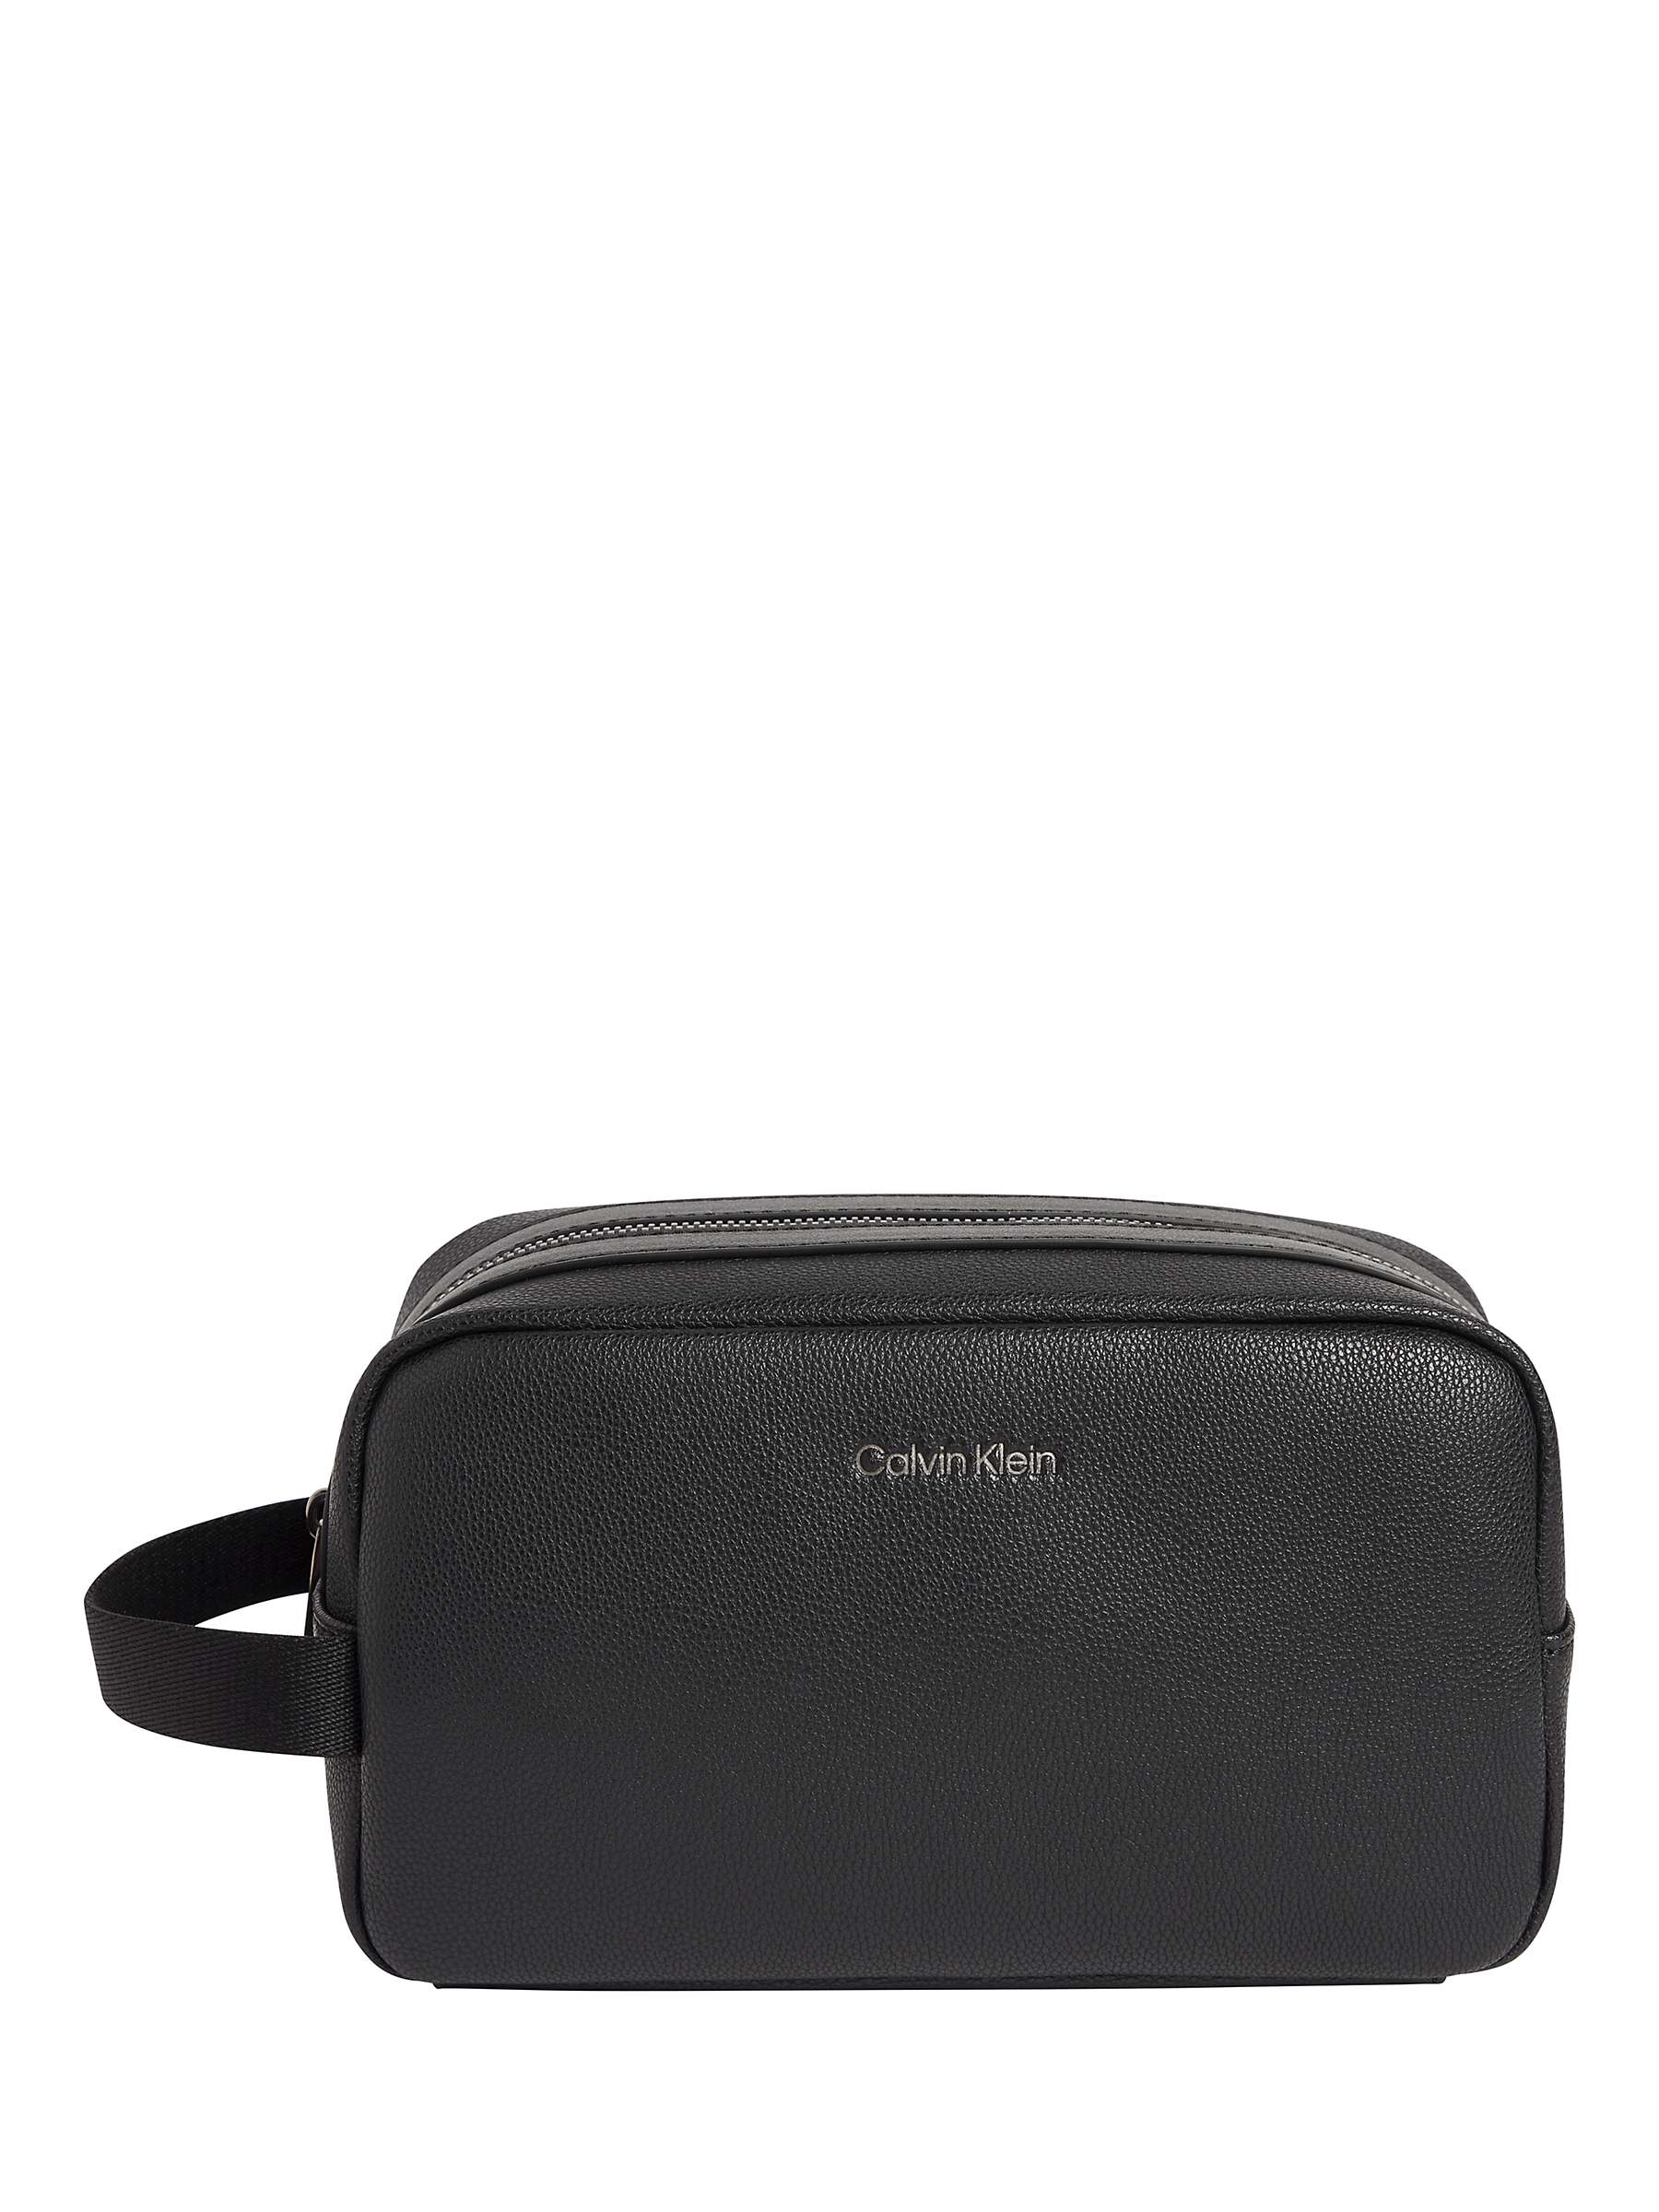 Buy Calvin Klein Wash Bag, Black Online at johnlewis.com